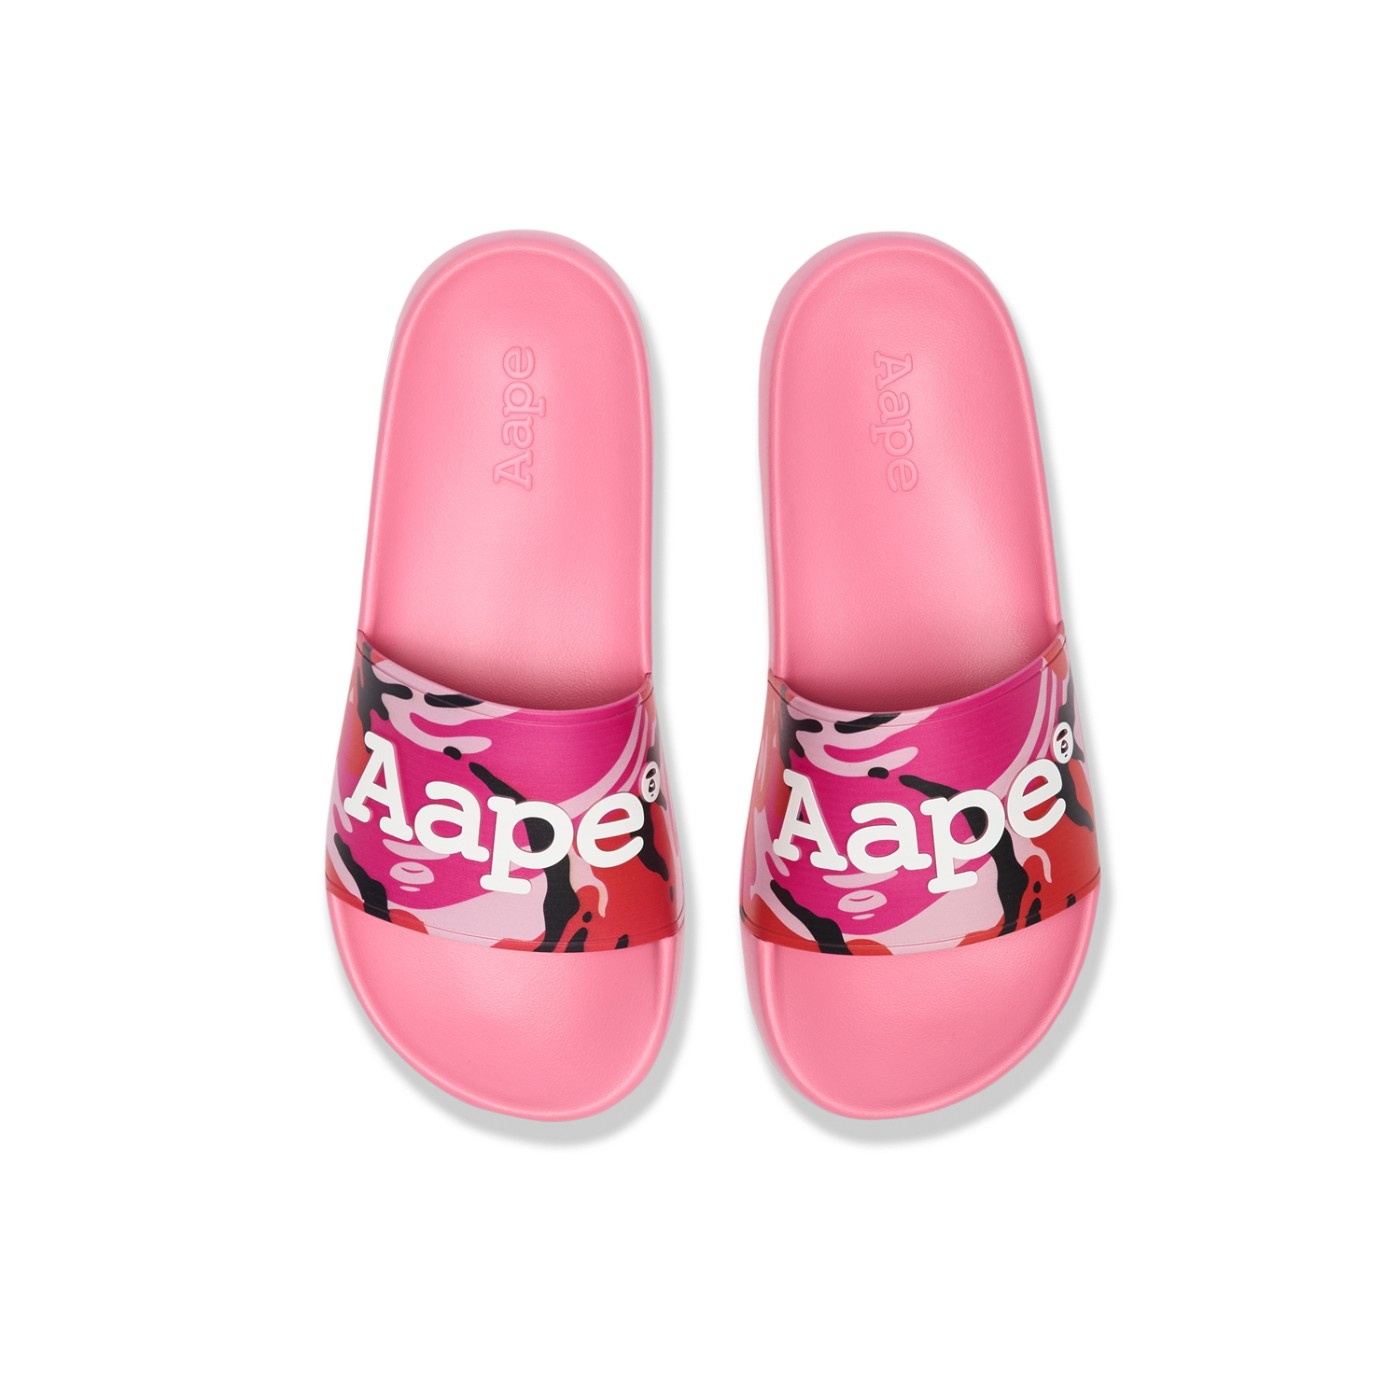 AAPE,SANDALS,SLIDE,FLOPS  经典迷彩夏日风！AAPE 春夏鞋款系列正式发布！